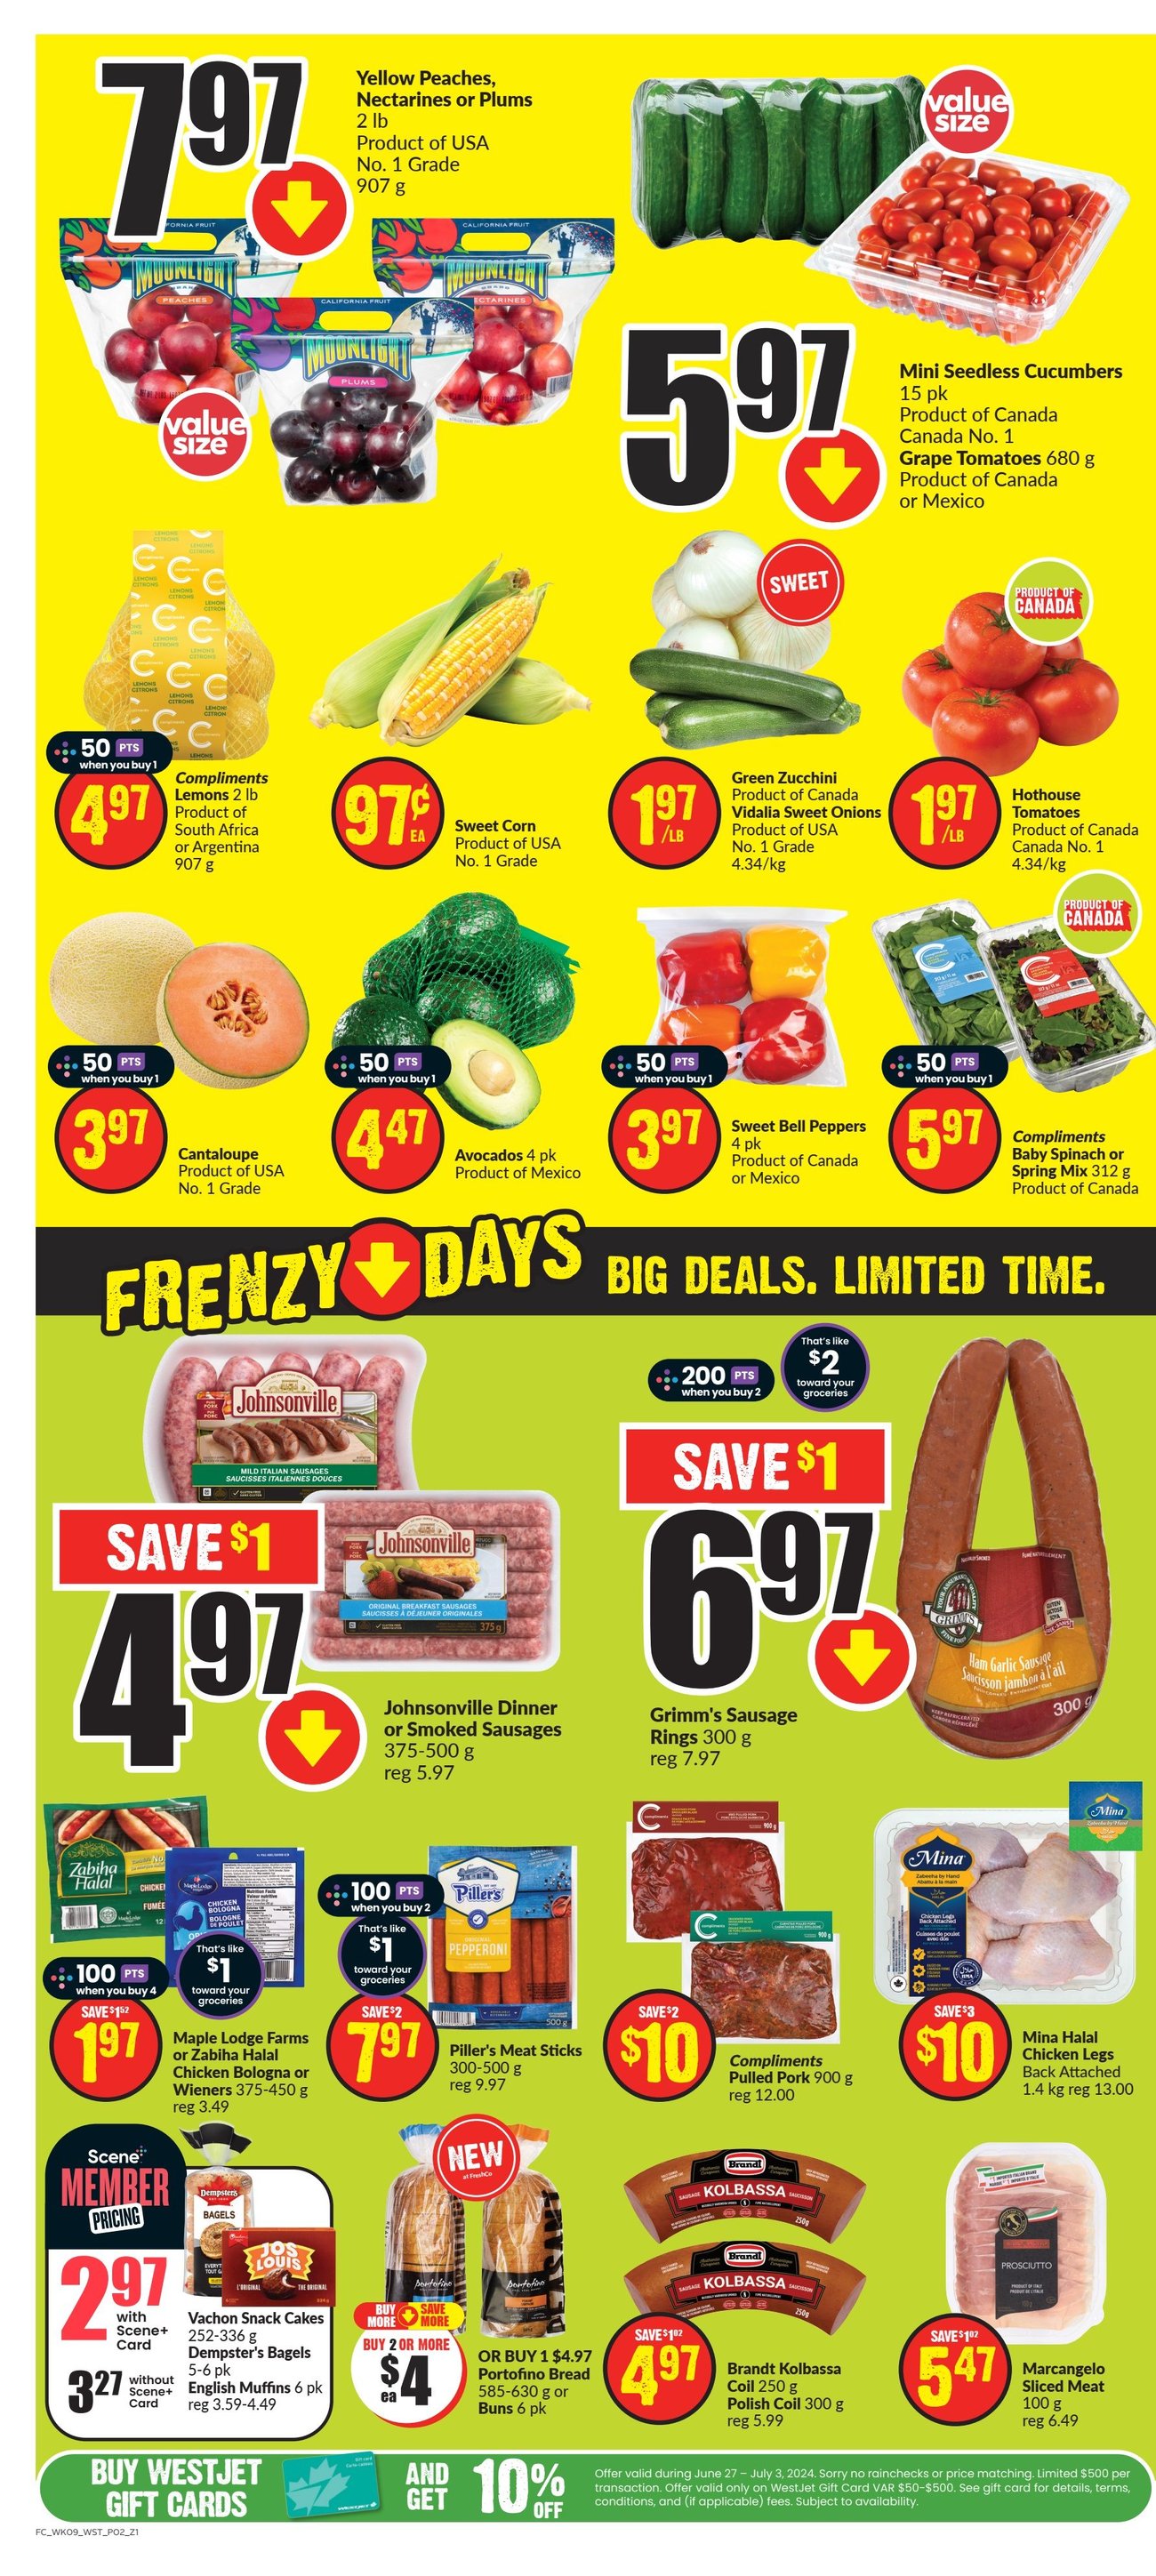 FreshCo - Western Canada - Weekly Flyer Specials - Page 2